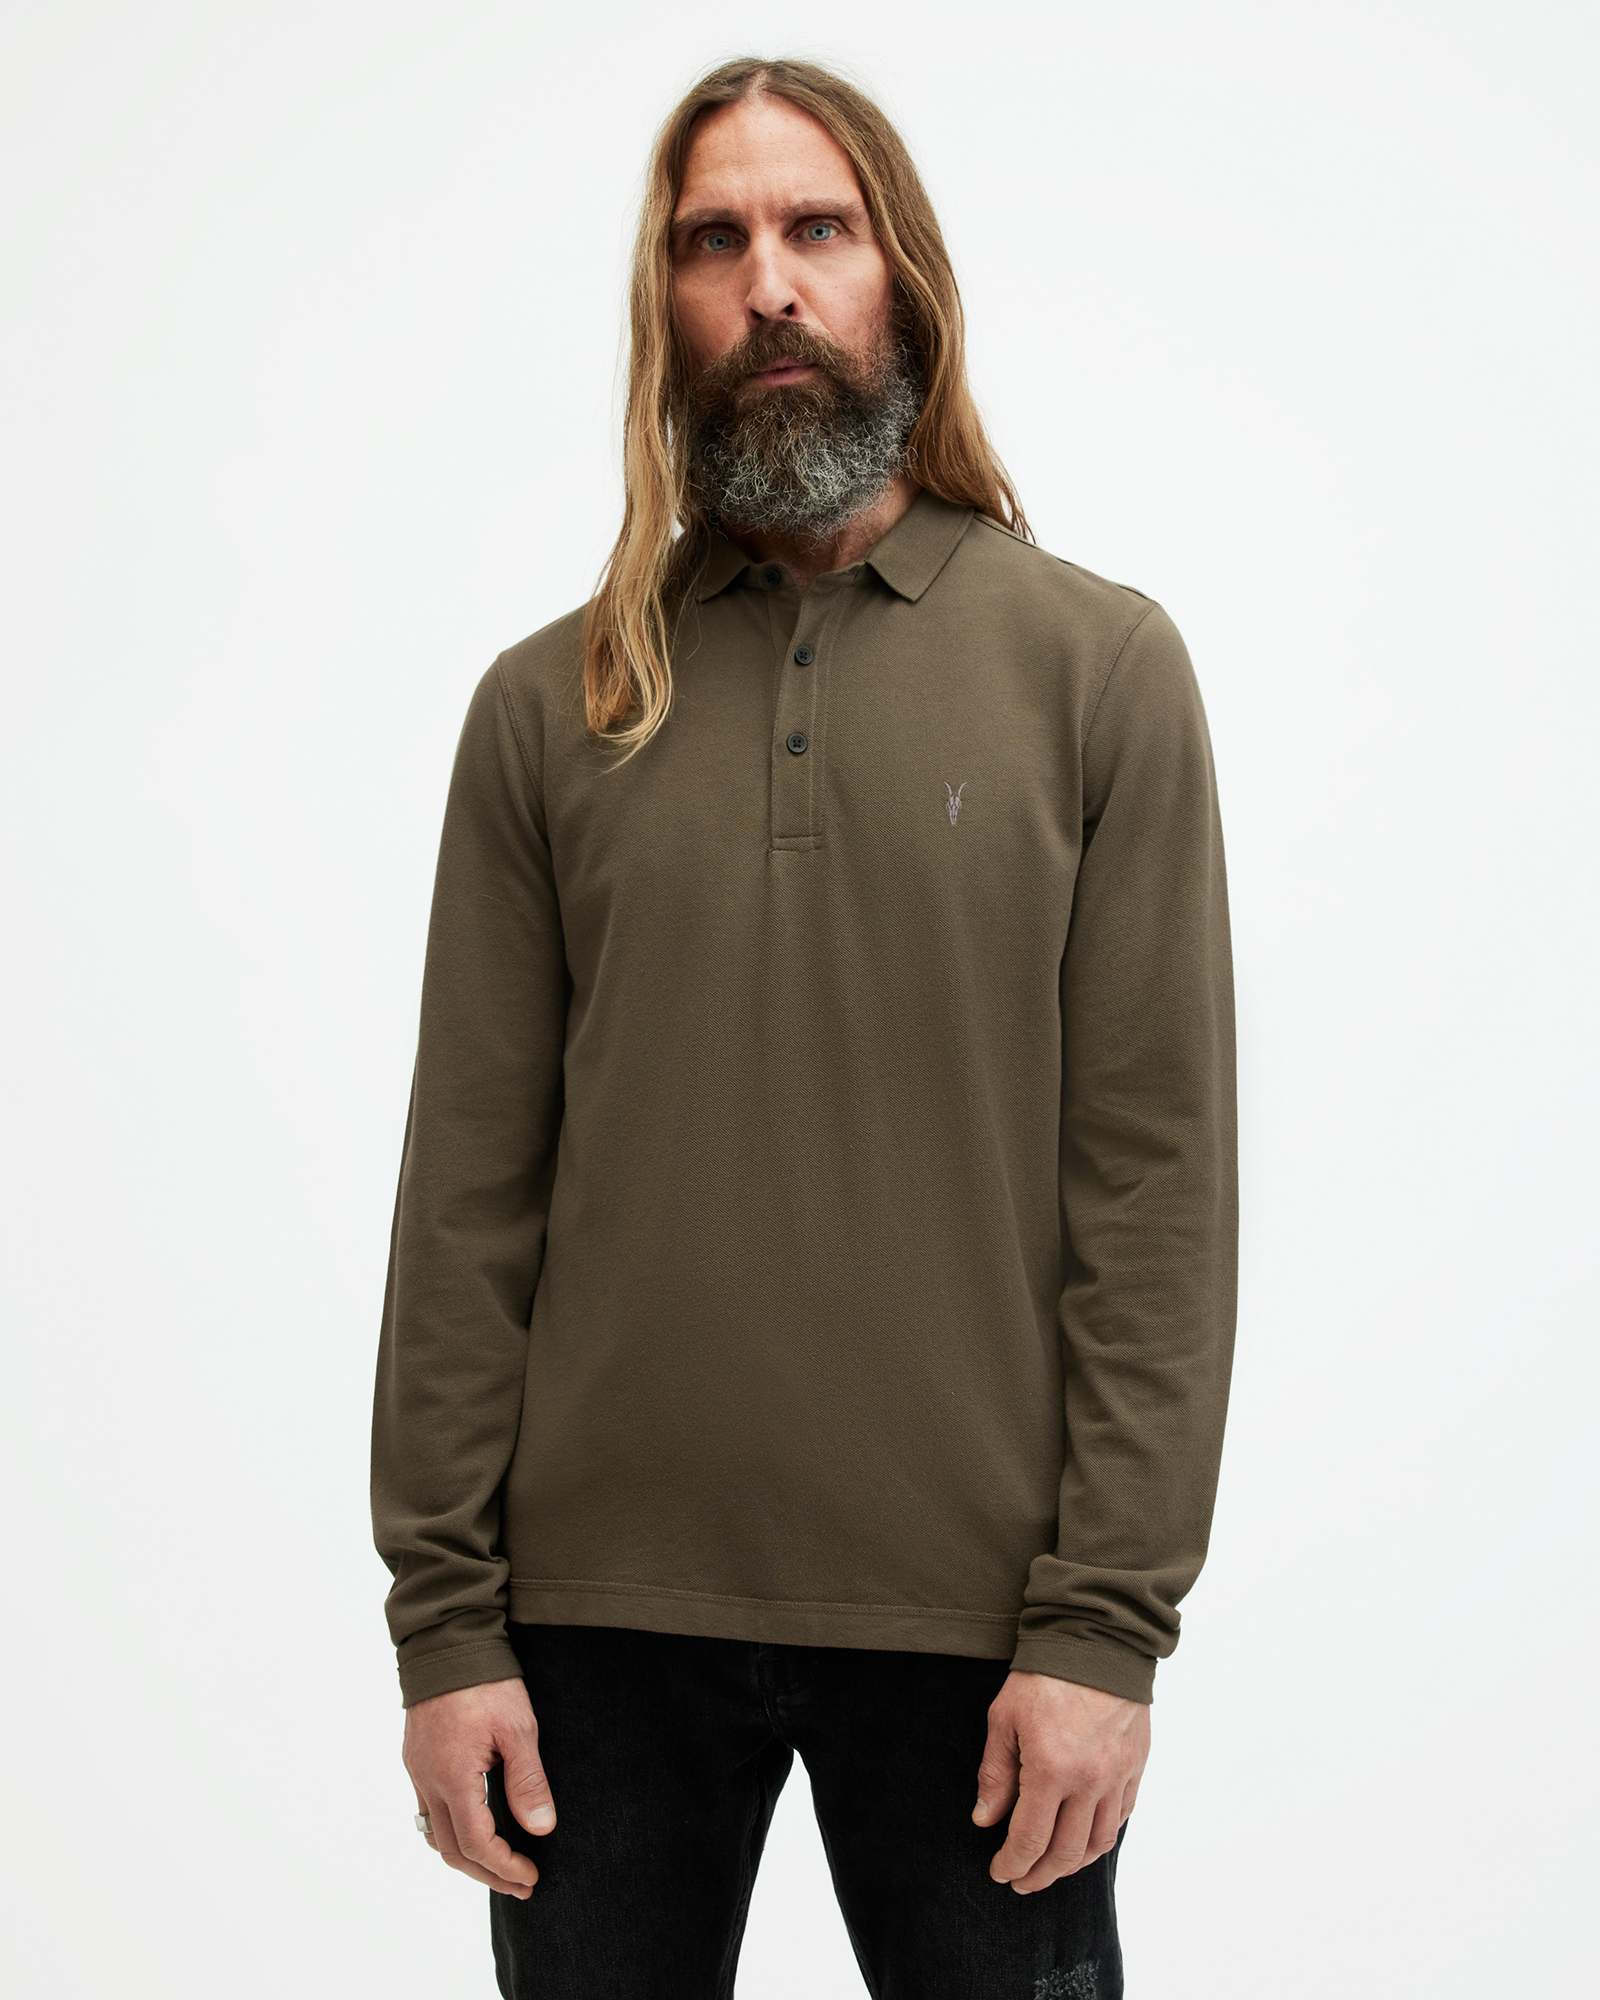 AllSaints Reform Long Sleeve Polo Shirt,, Size: